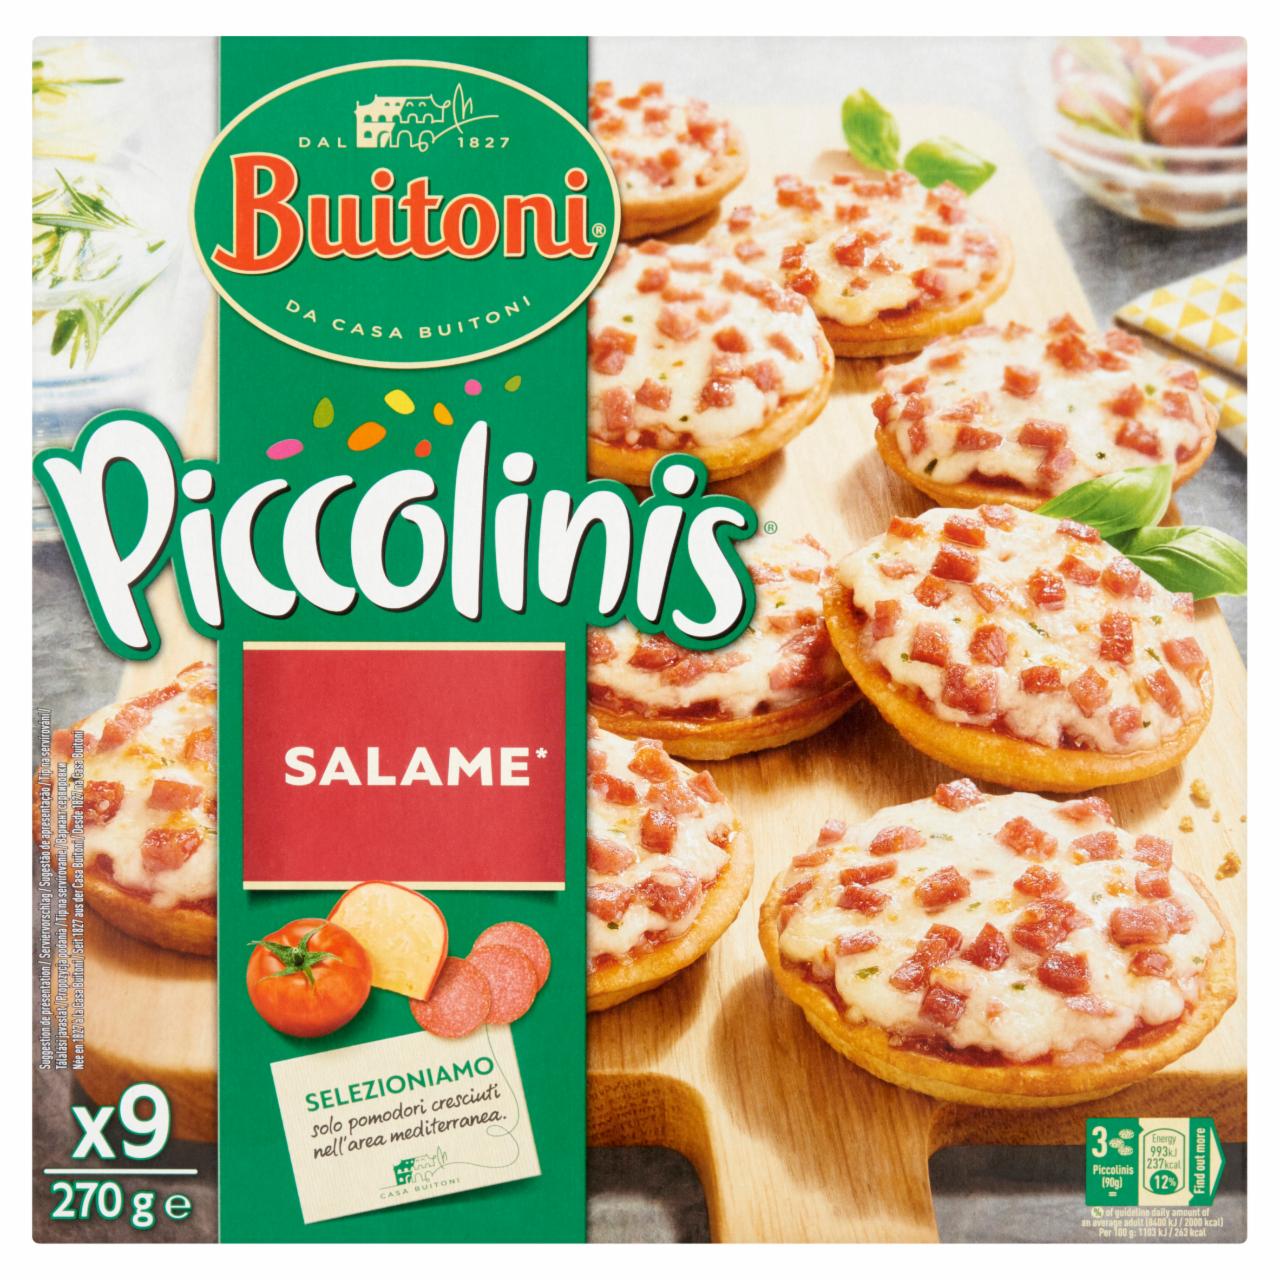 Képek - Buitoni Piccolinis Salame gyorsfagyasztott mini pizza 9 db 270 g